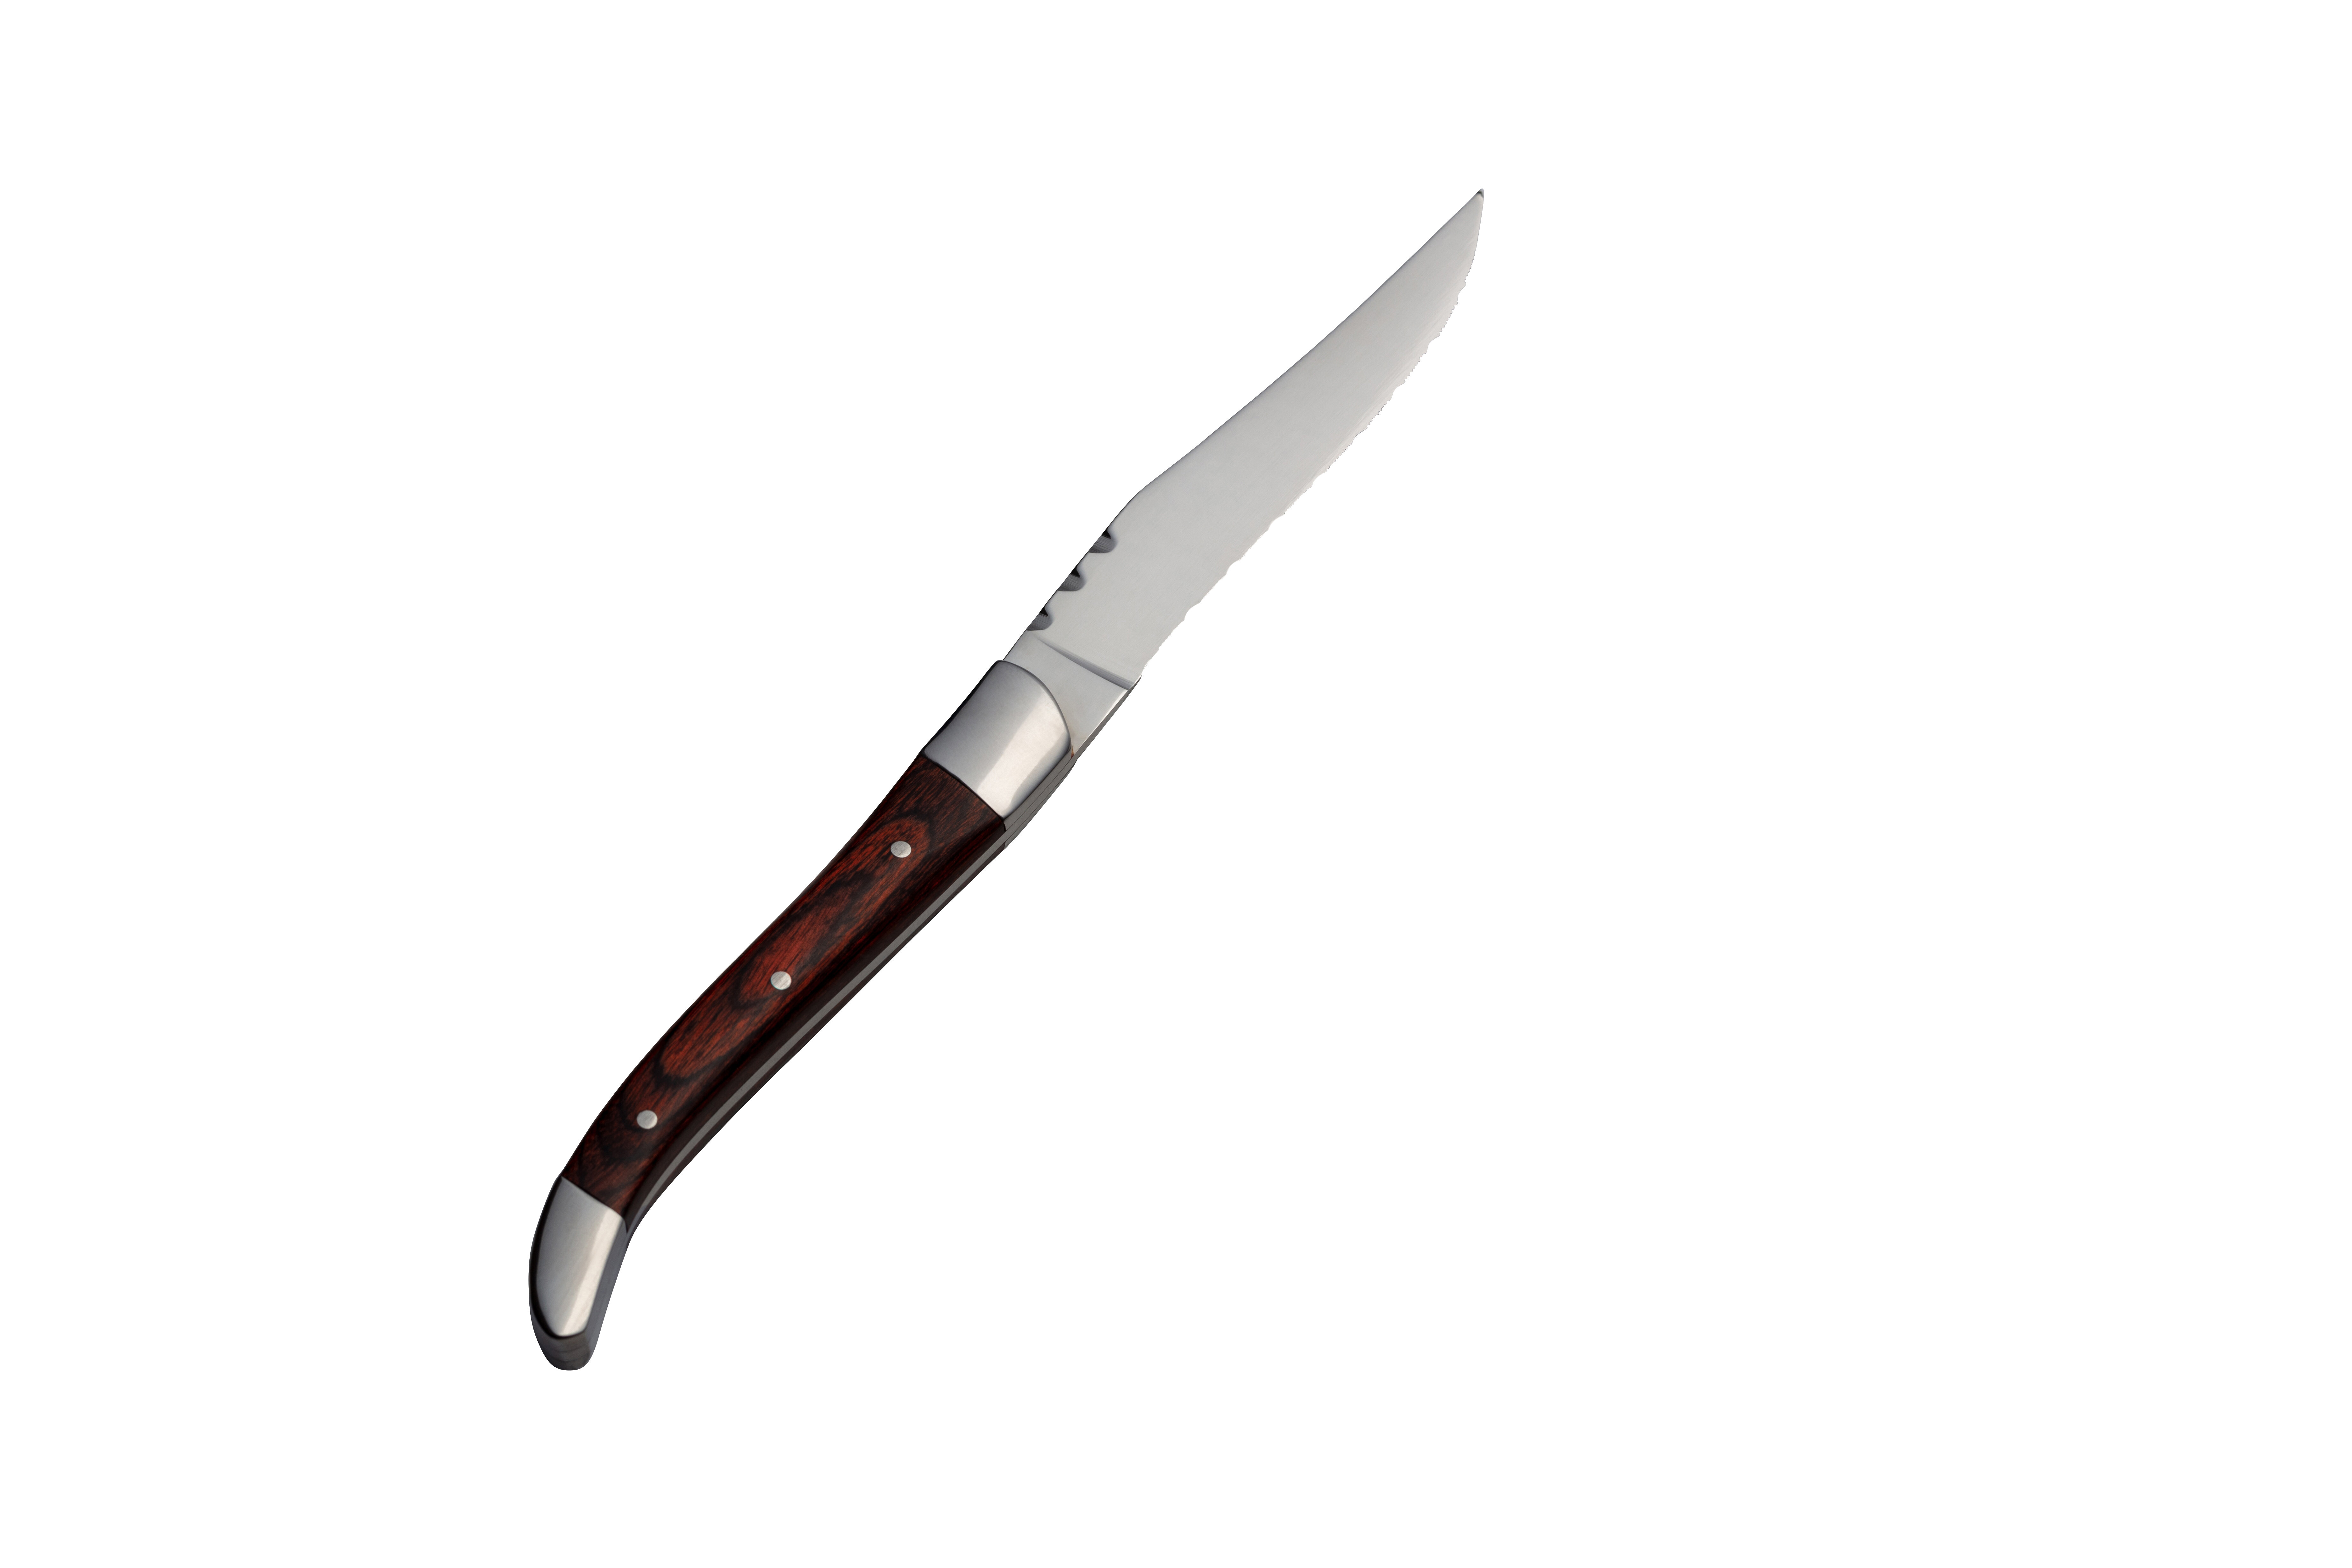 Laguiole Steak Knife, Wooden Dinner Knifes, Wooden Steak Knives